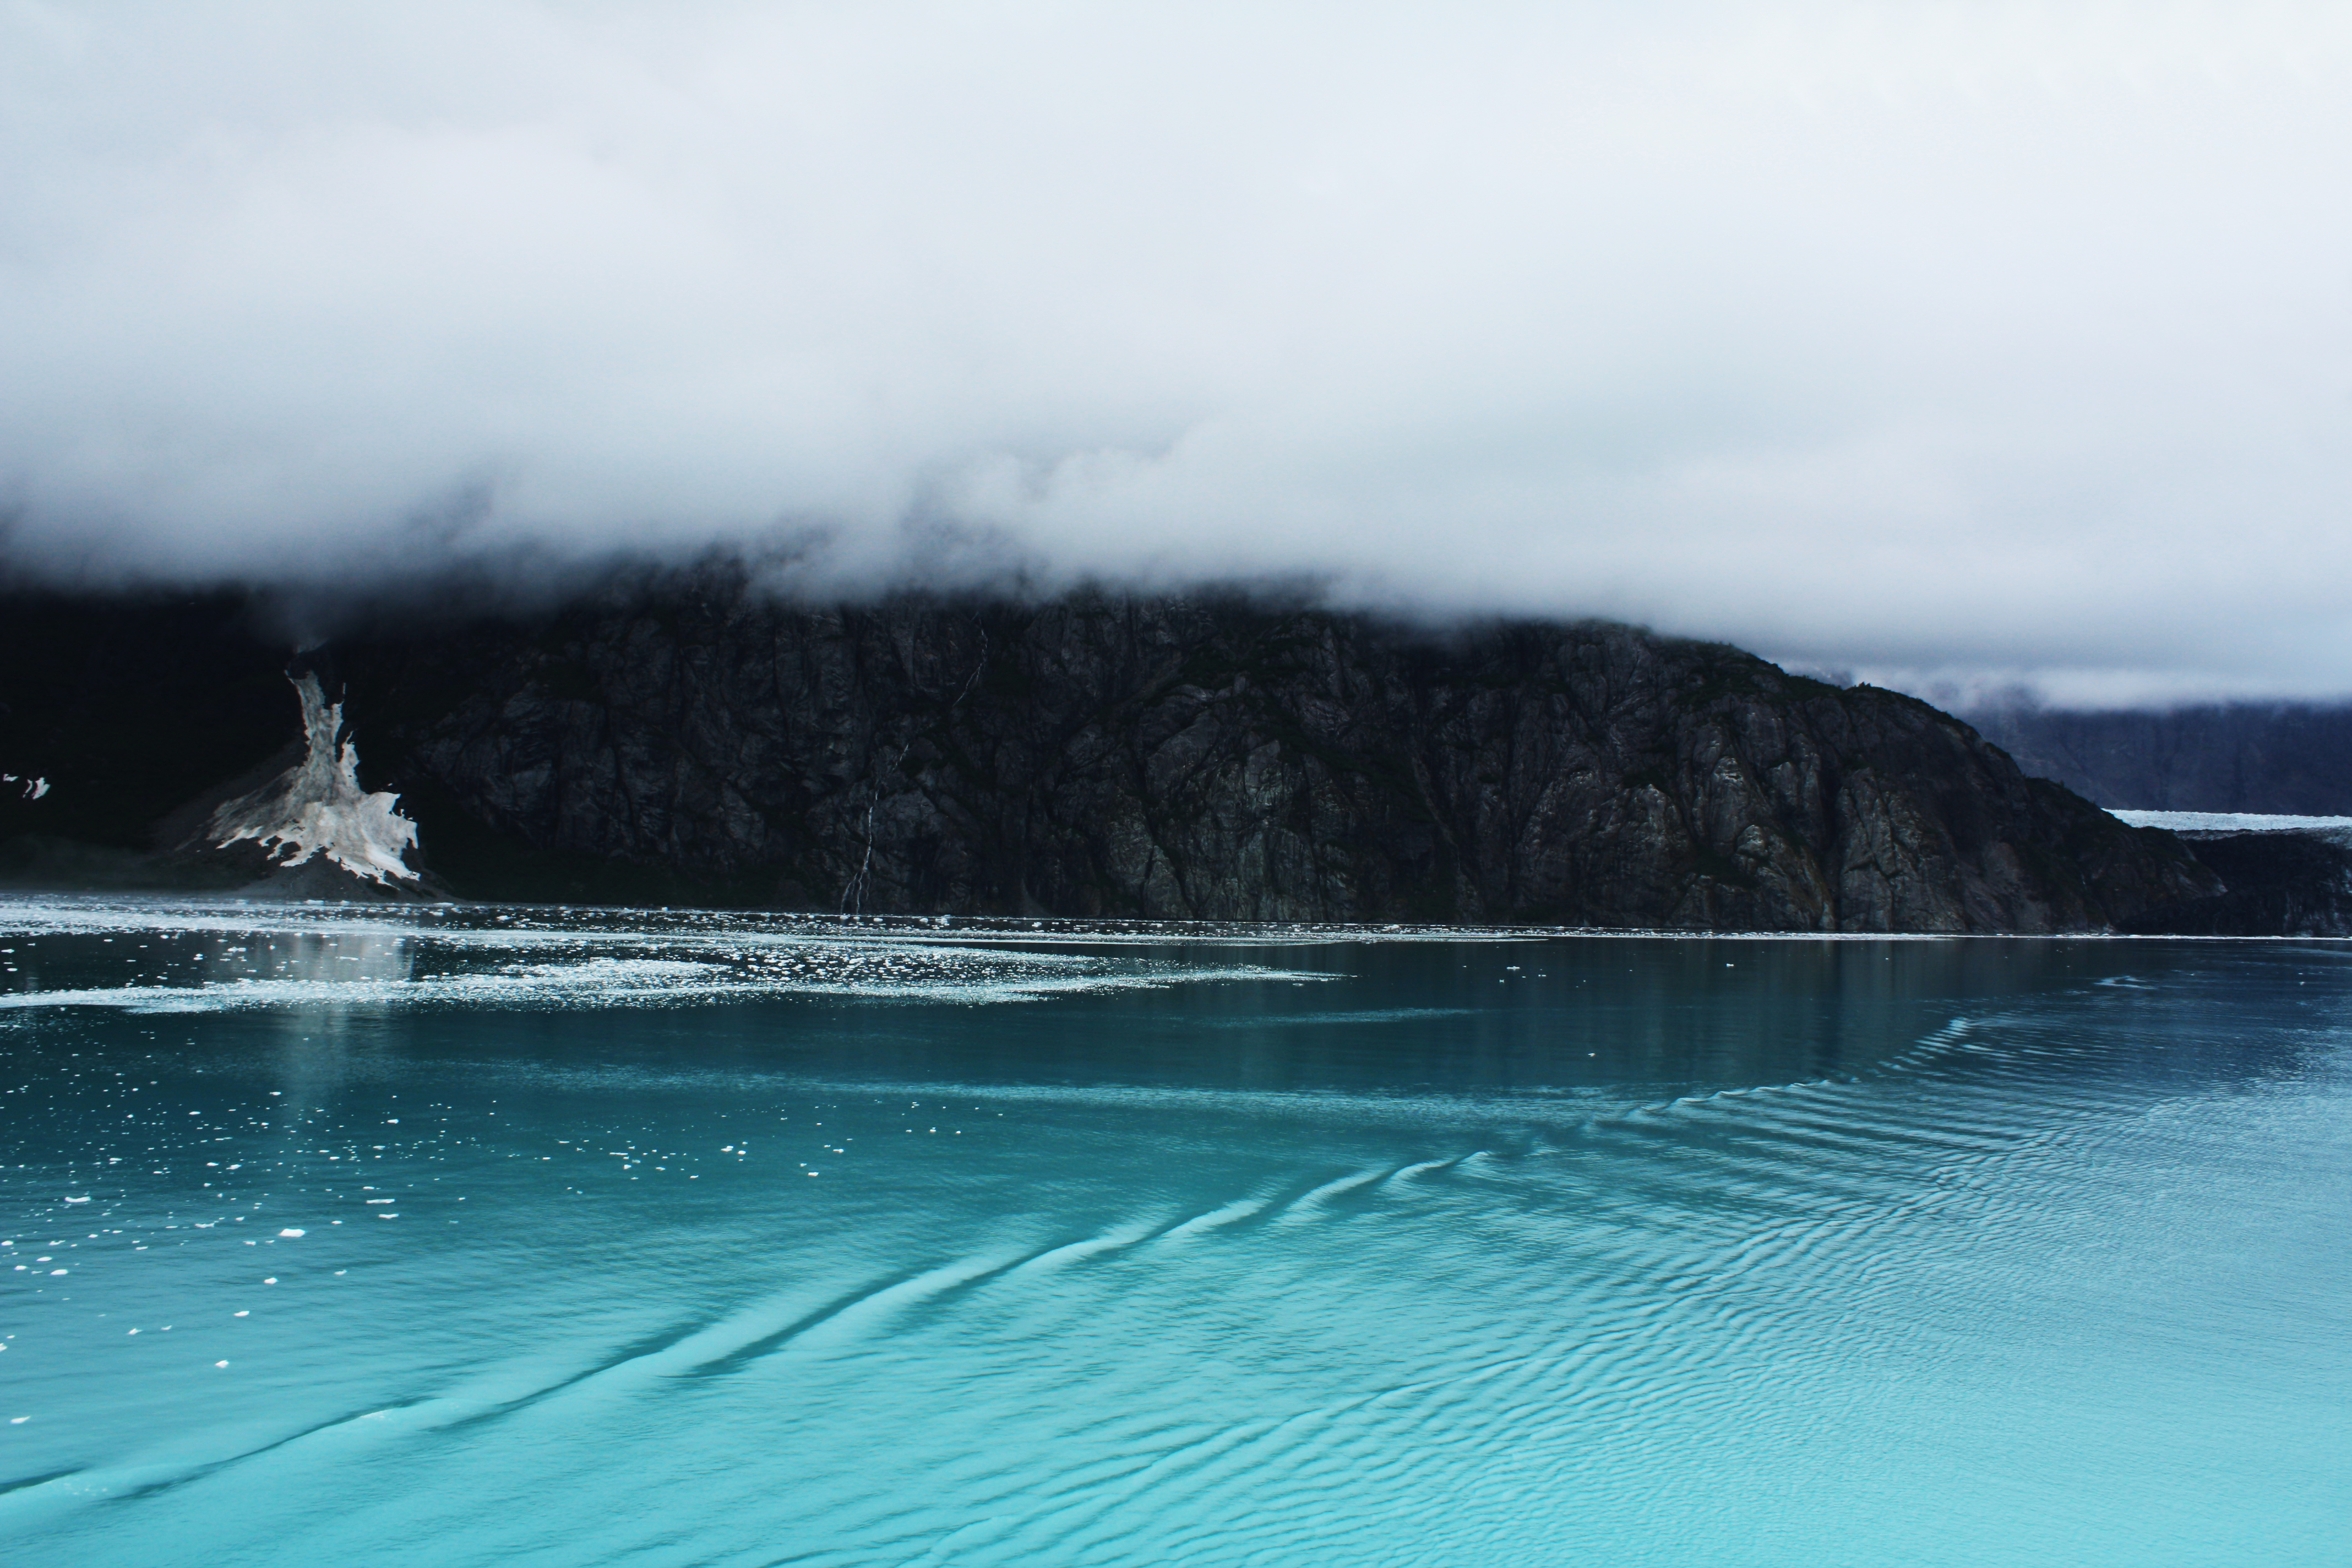 Alaskan water with ripples